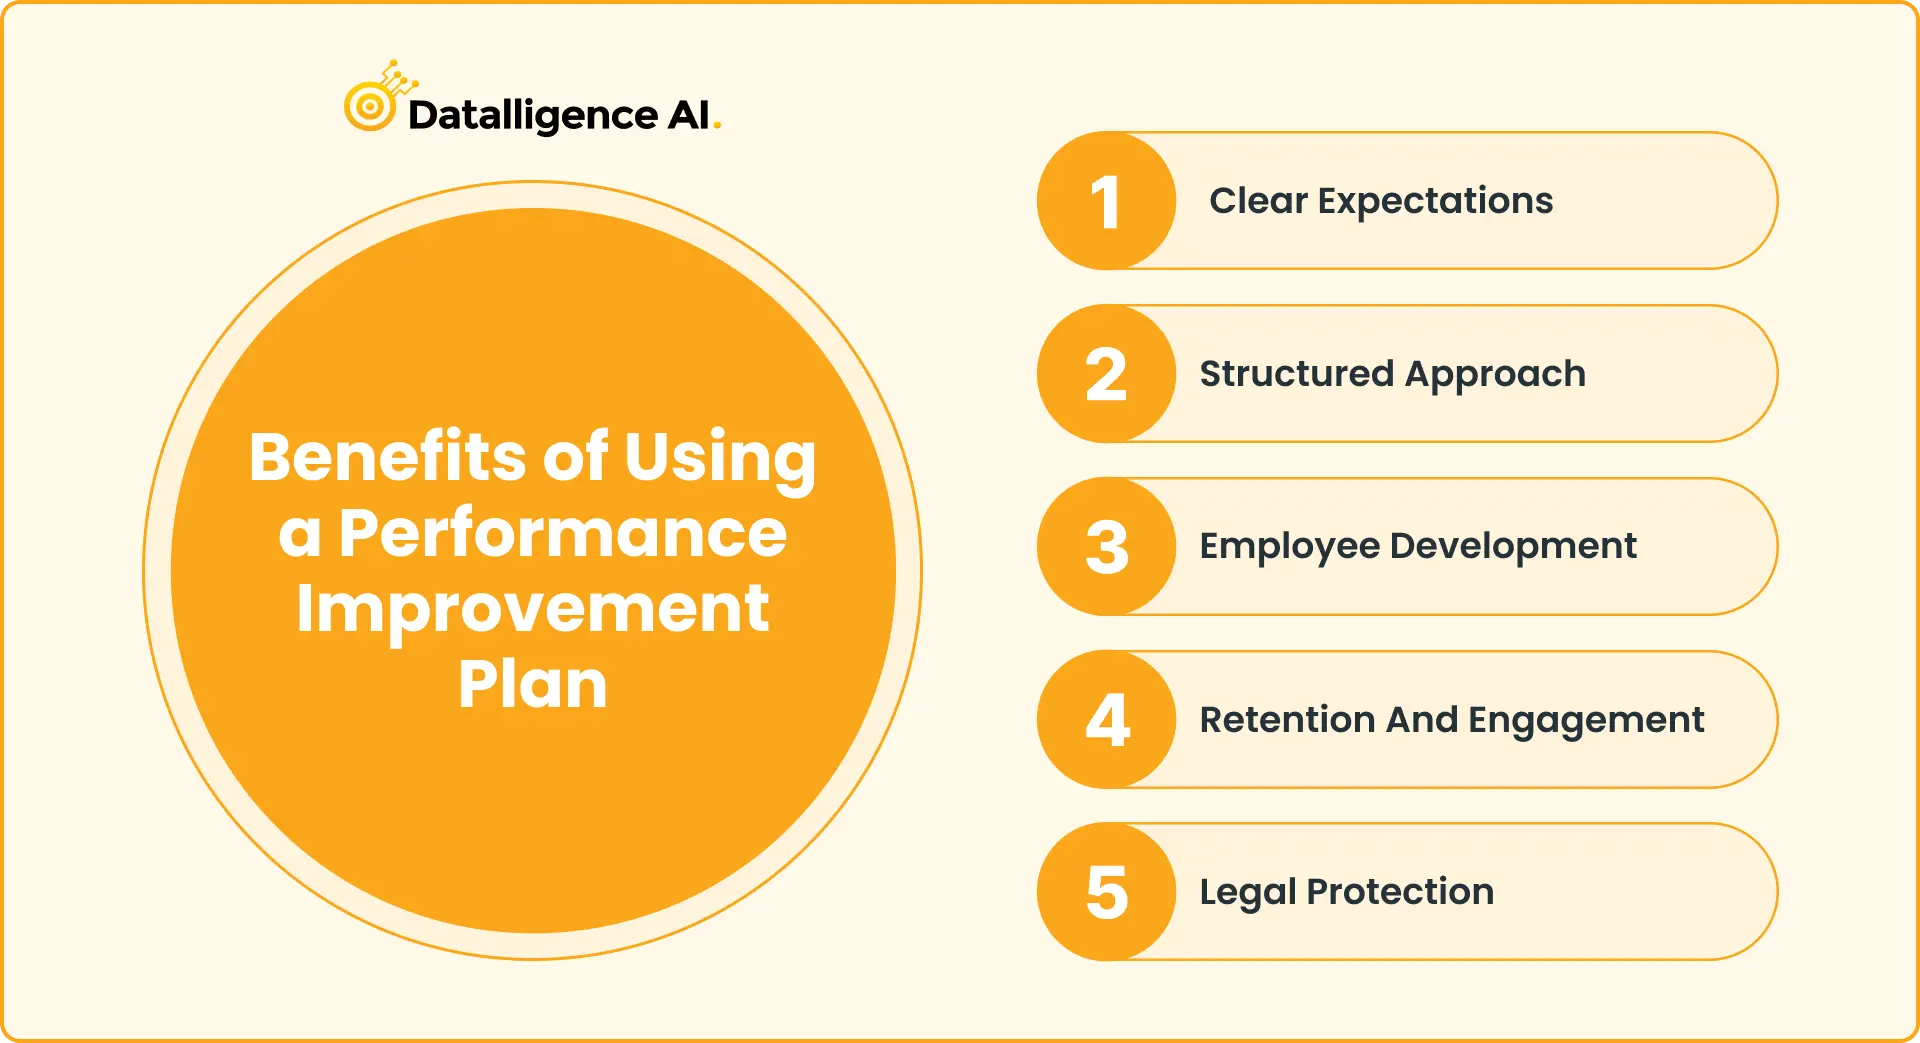 Benefits of Using a Performance Improvement Plan